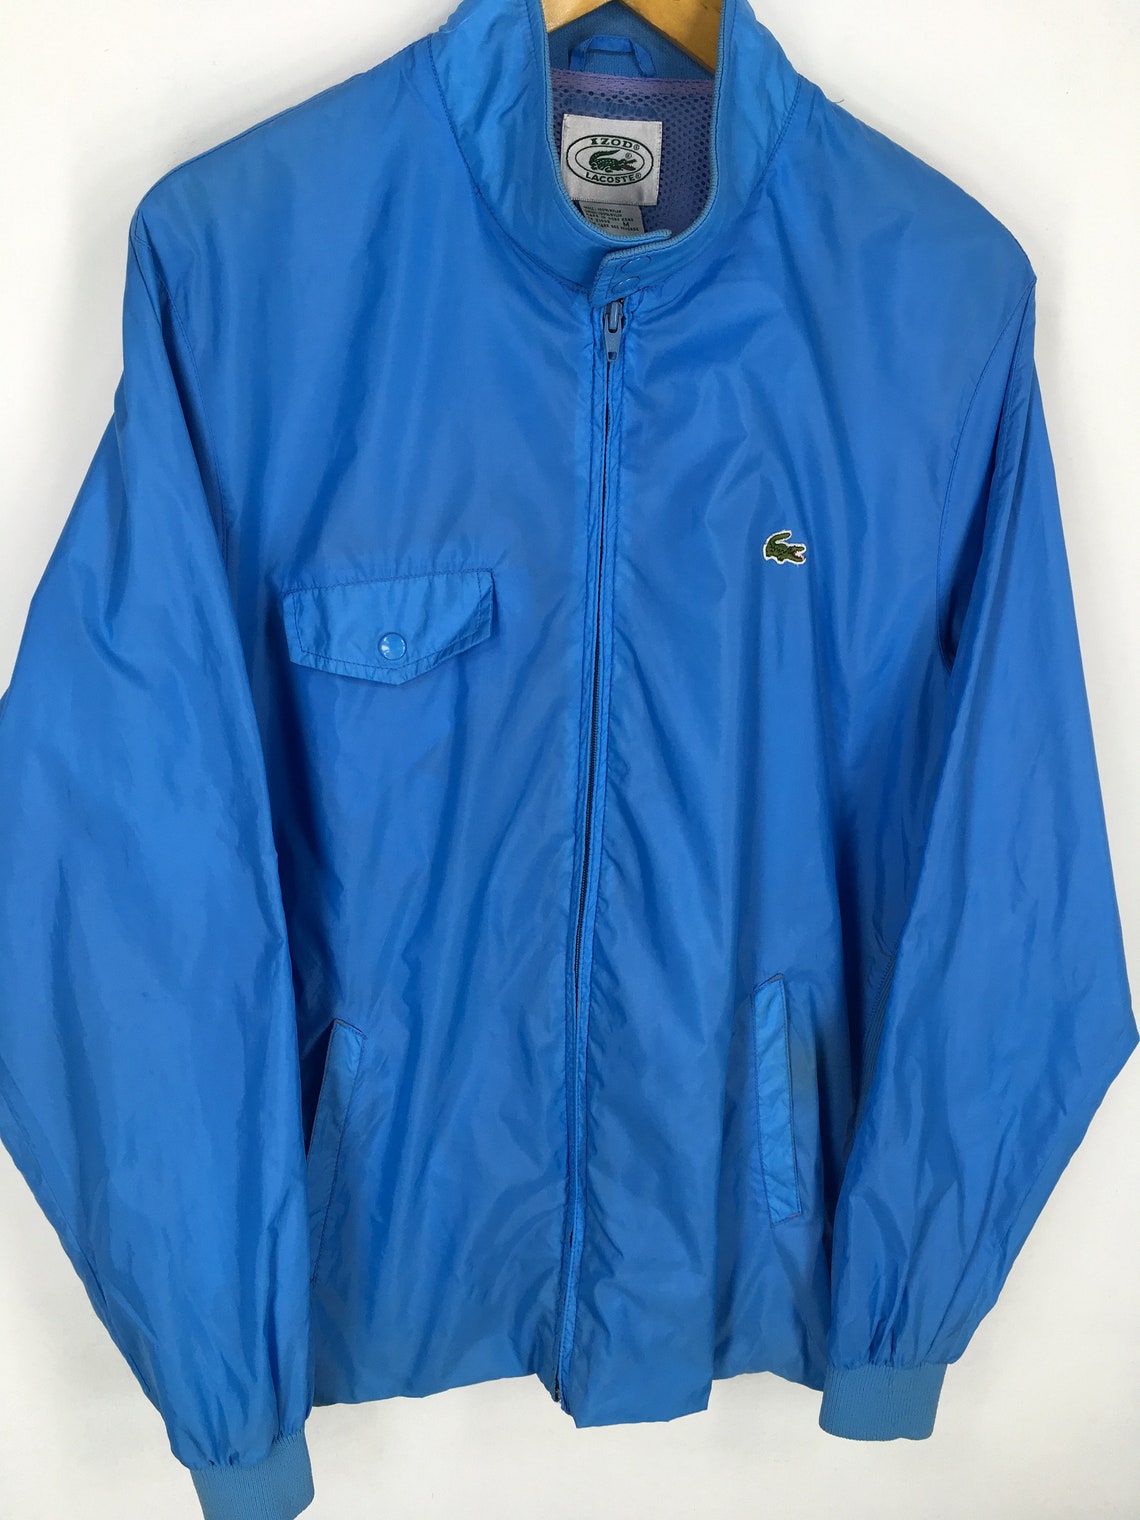 Vintage 90's Izod Lacoste Windbreaker Blue Jacket Medium | Etsy